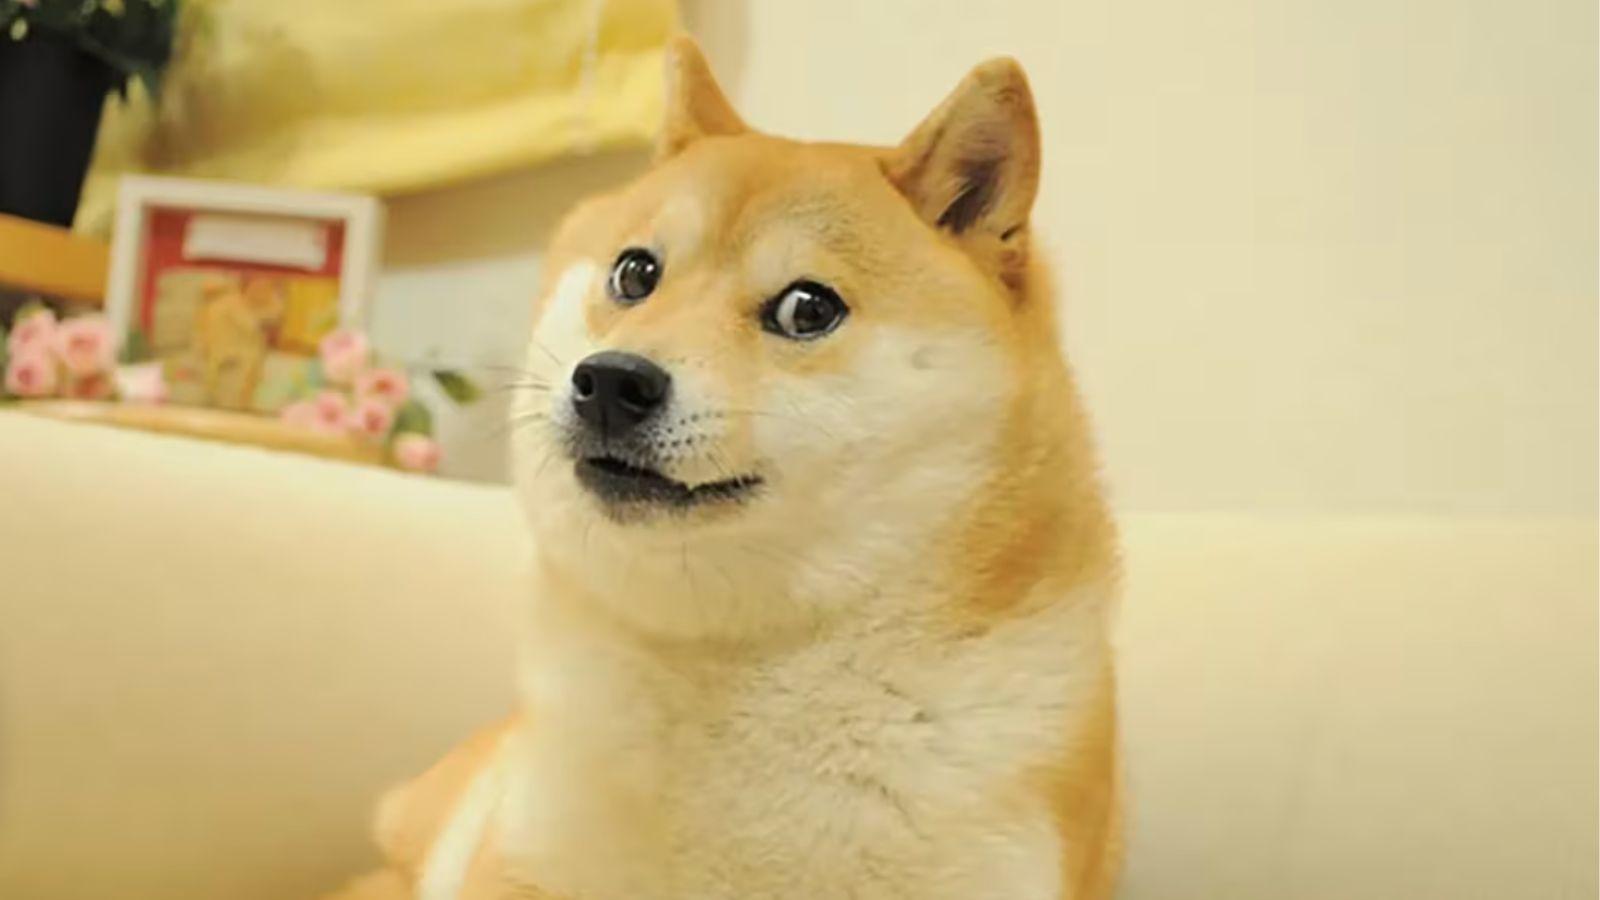 The doge meme dog Kabosu